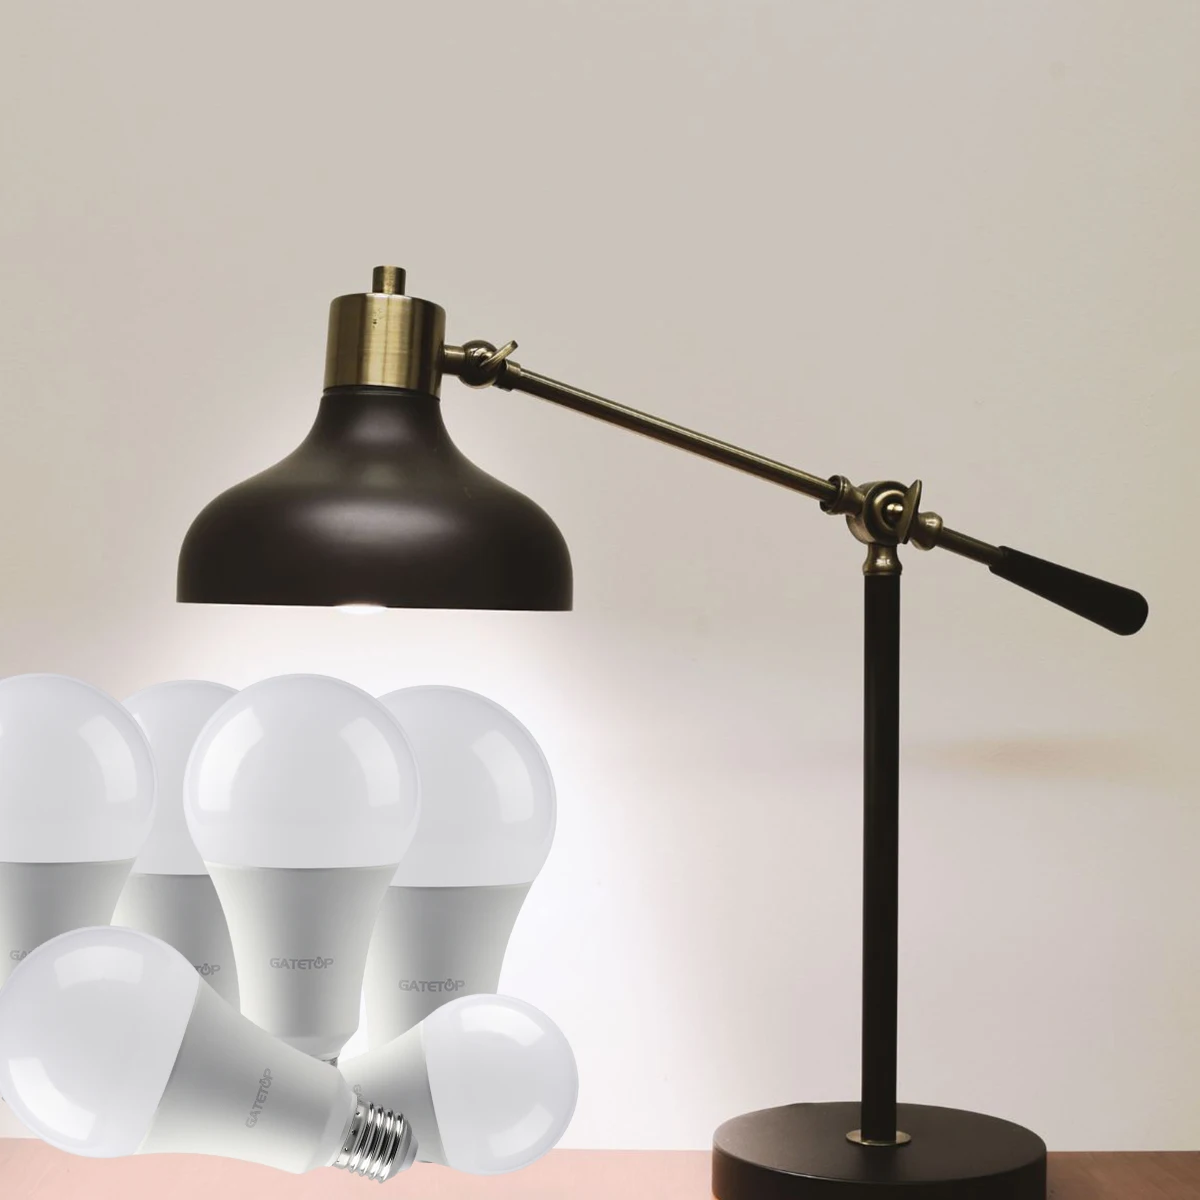 

1-10PCS Led Bulb Lamps E27 B22 AC120V AC220V Light Real Power 8W 9W 10W 12W 15W 18W Warm White Cold White Lampada For Home